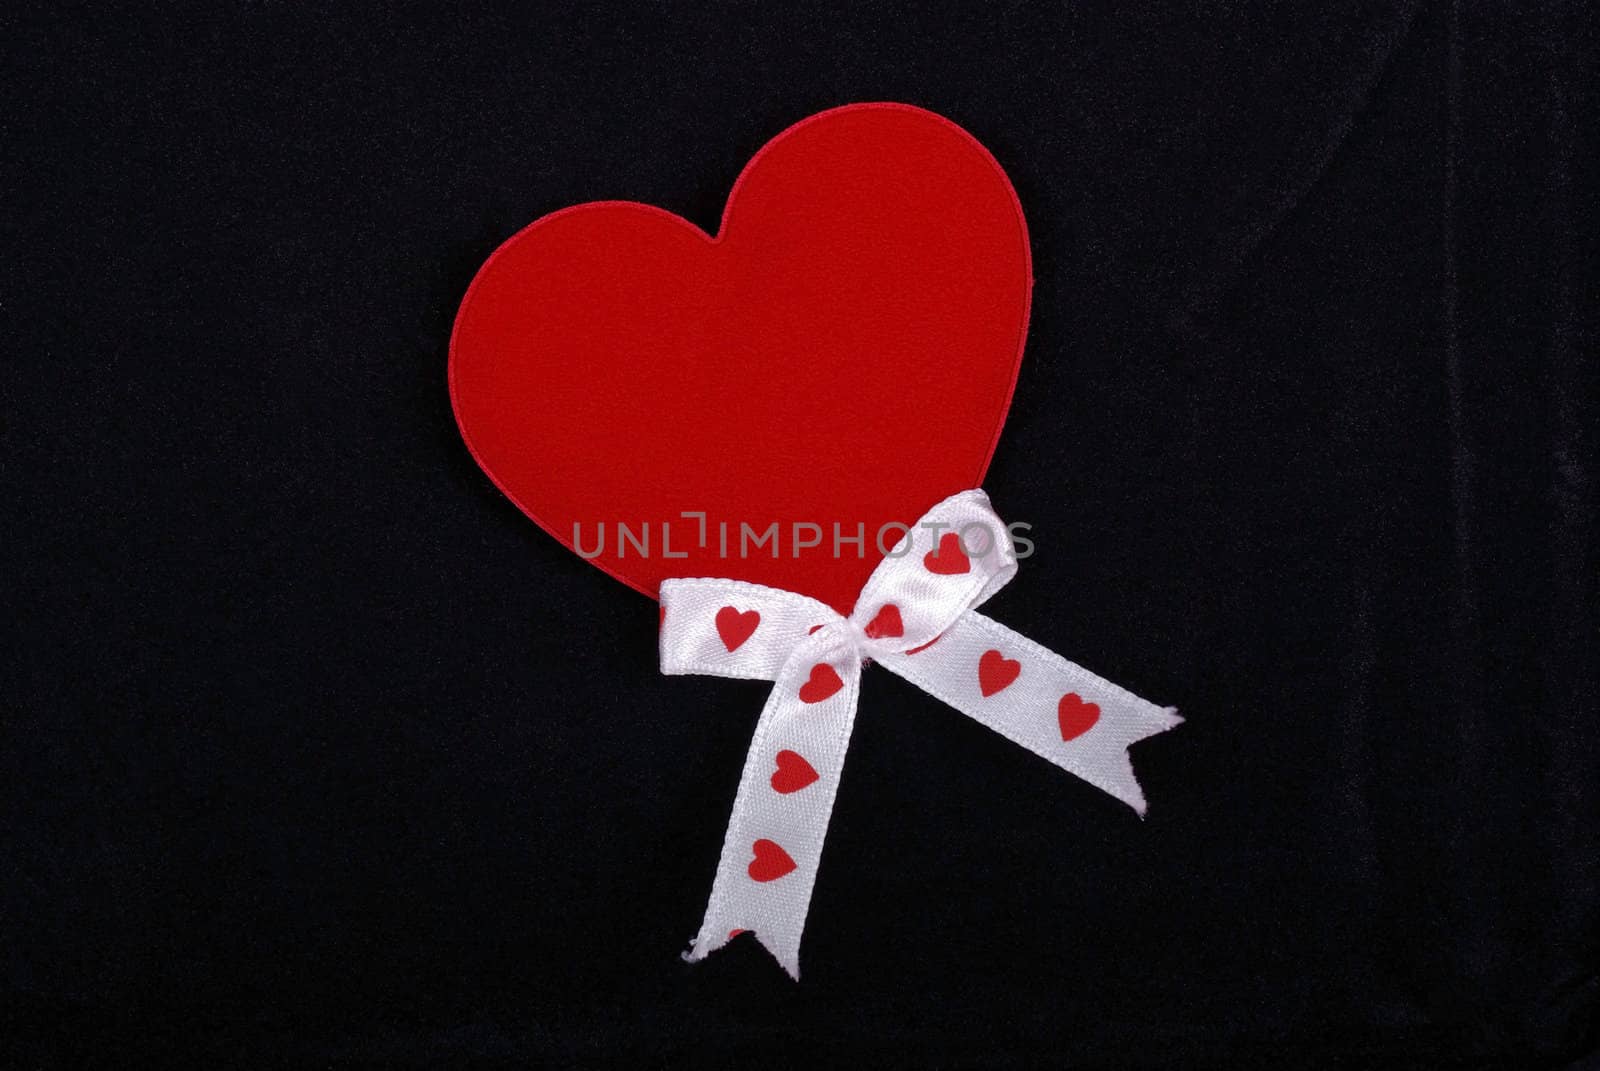 Red heart with white ribbons isolated on black velvet background.